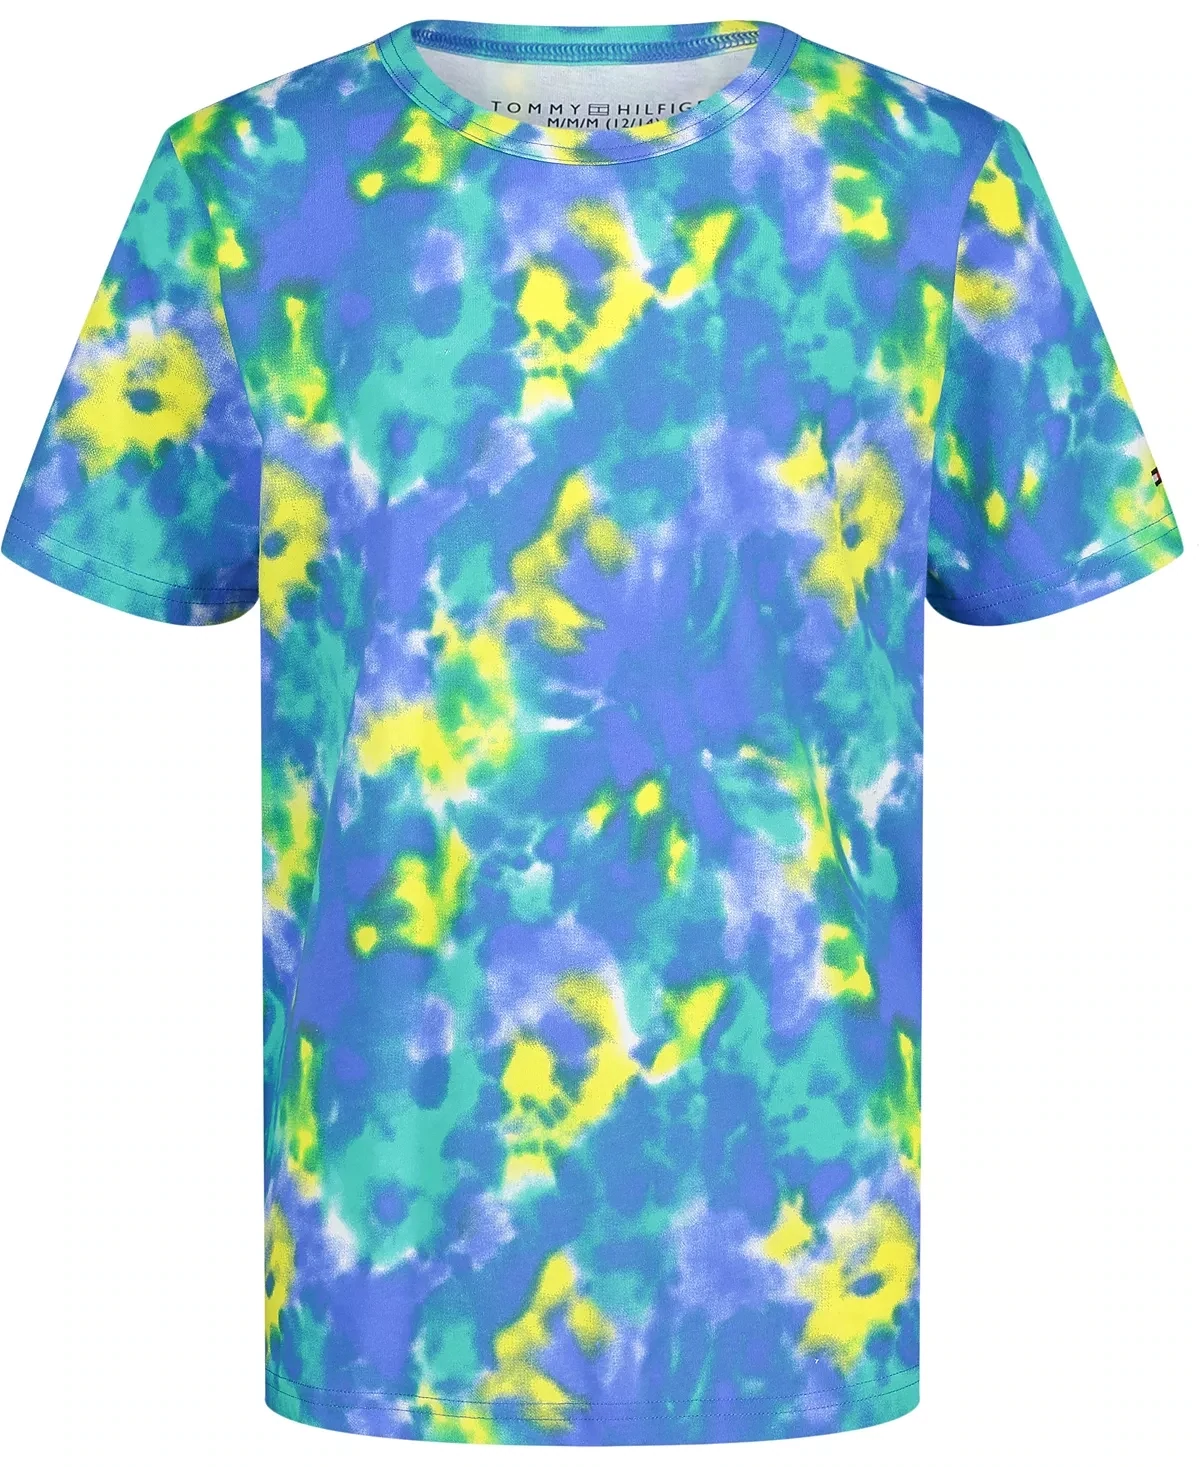 Tommy Hilfiger Little Boys Tie Dye T-shirt - Nebulas Blue - Size 7